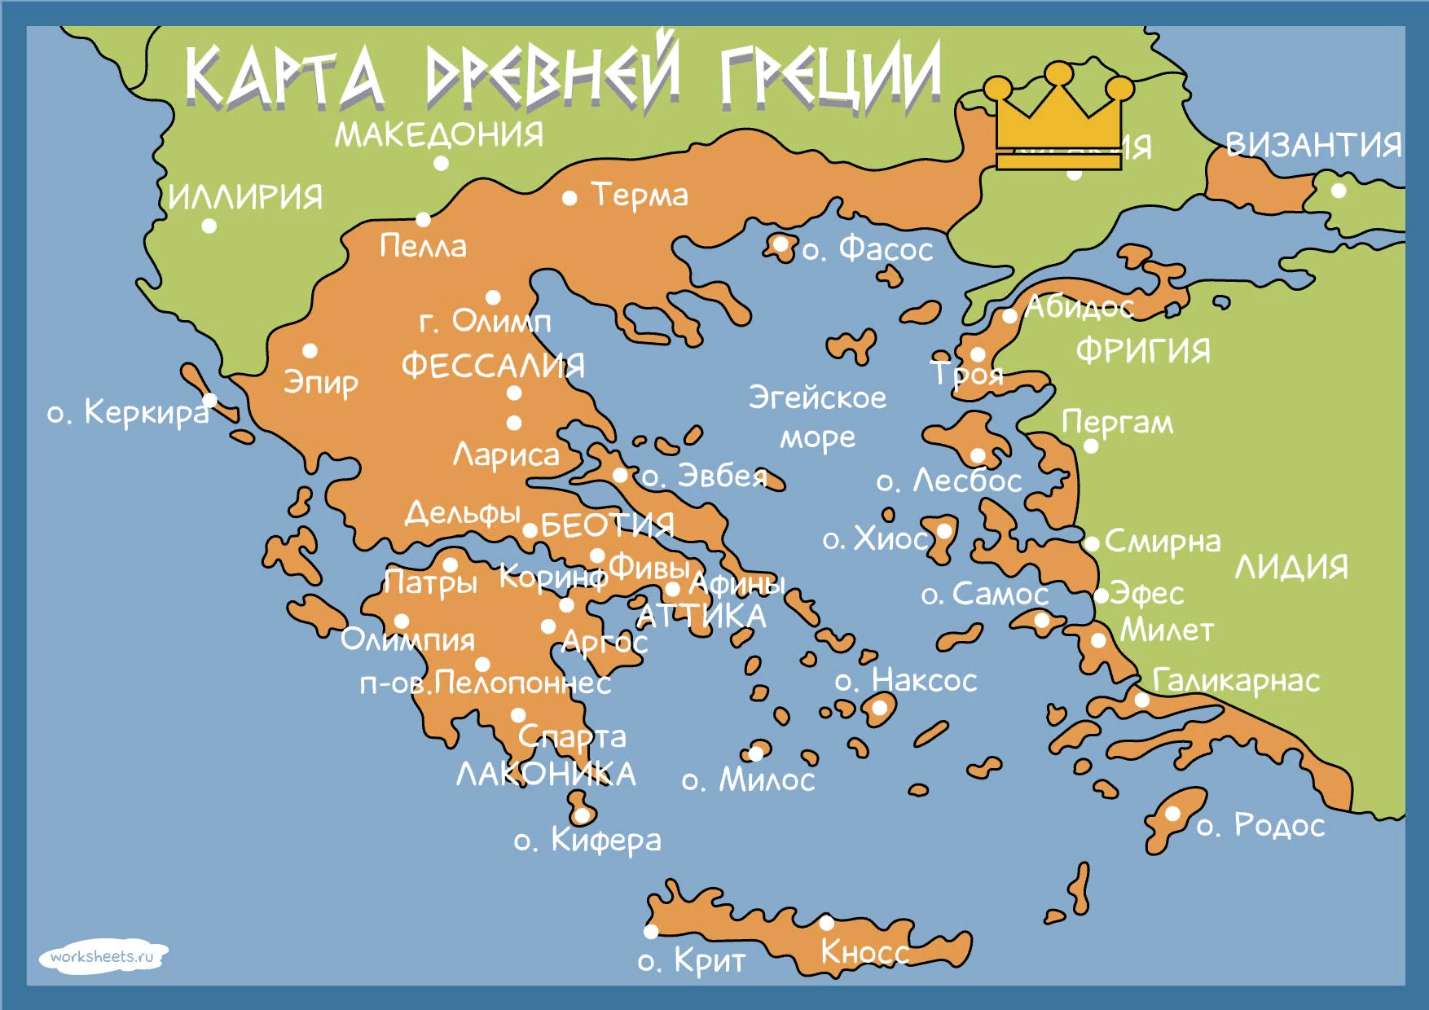 Mapa de la antigua Grecia puzzle online a partir de foto